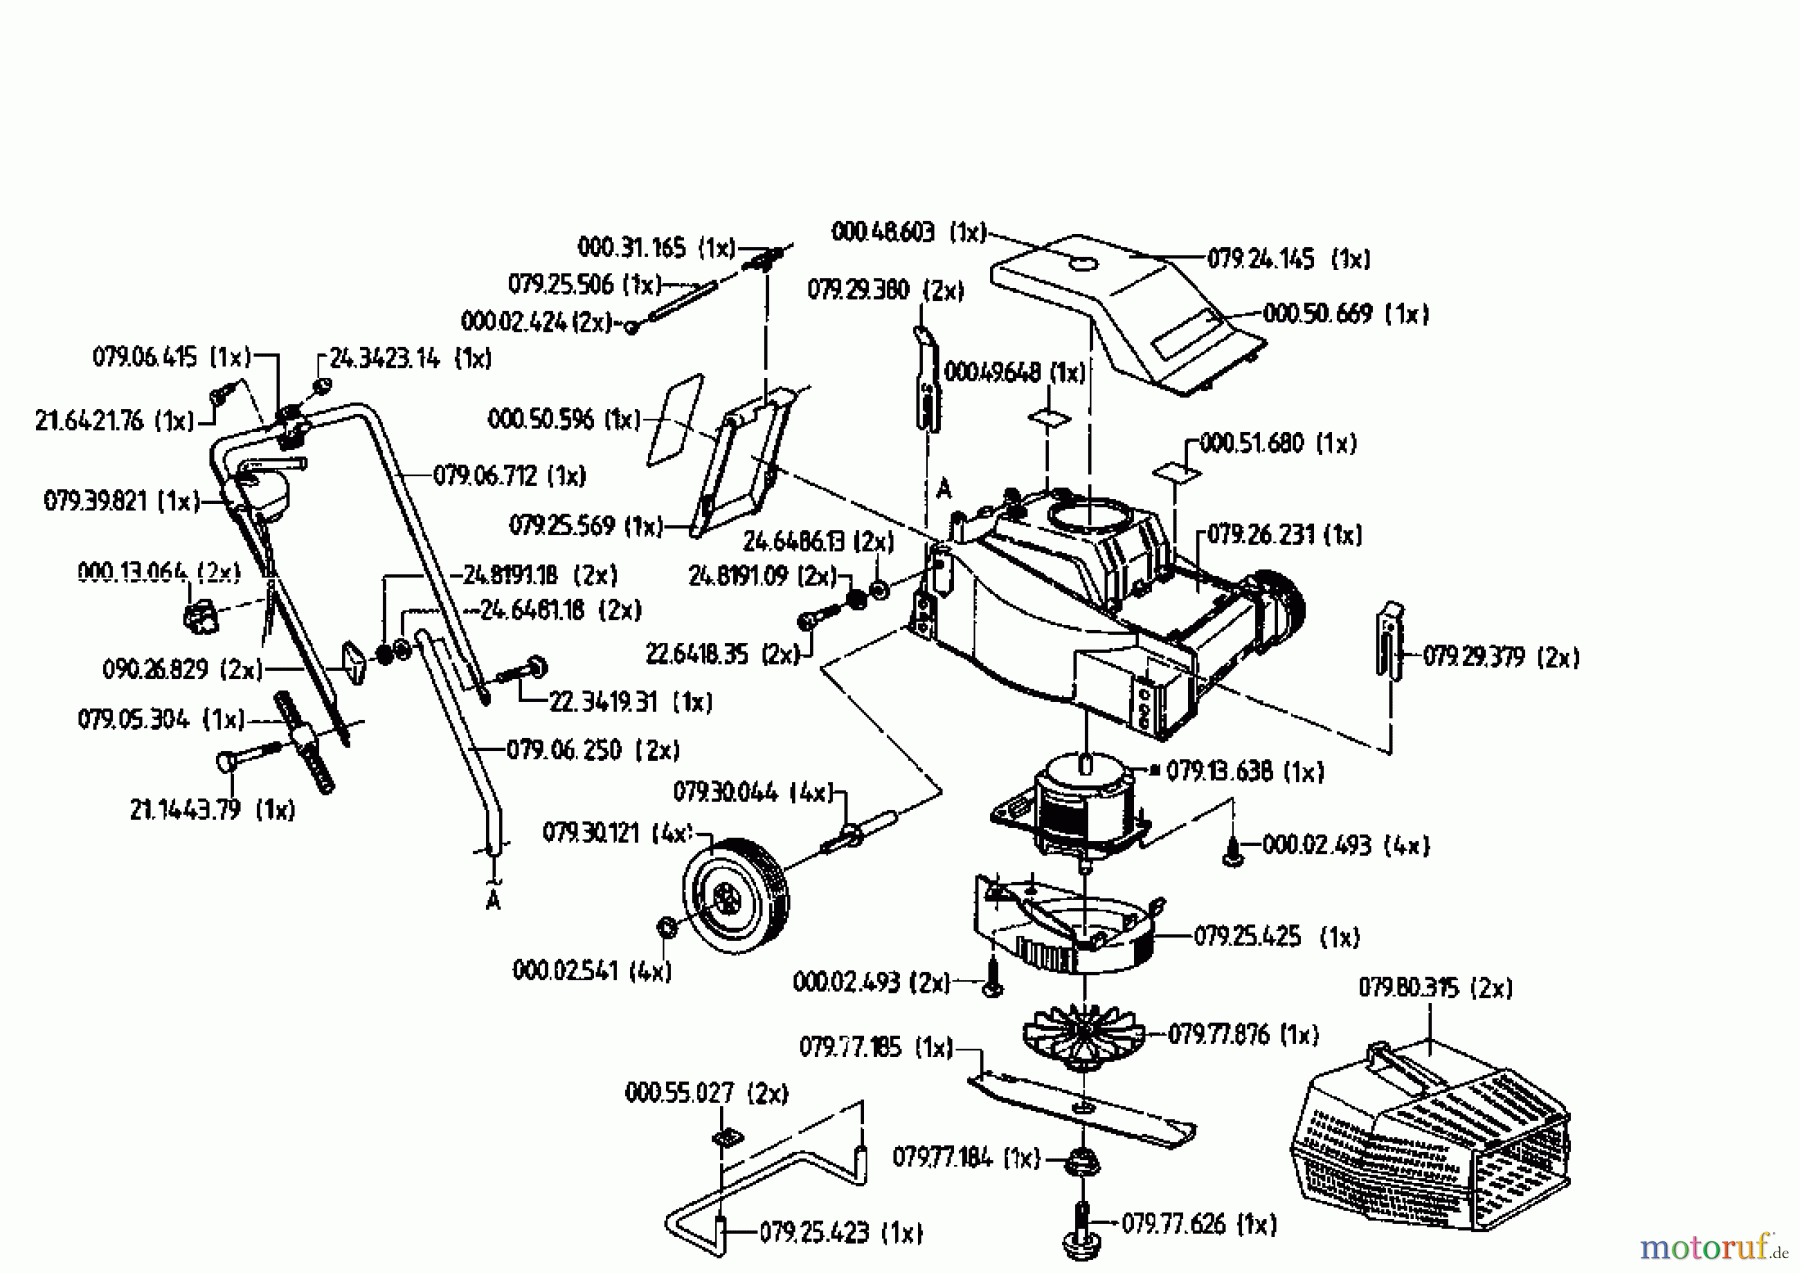  Golf Electric mower Junior 02819.03  (1995) Basic machine